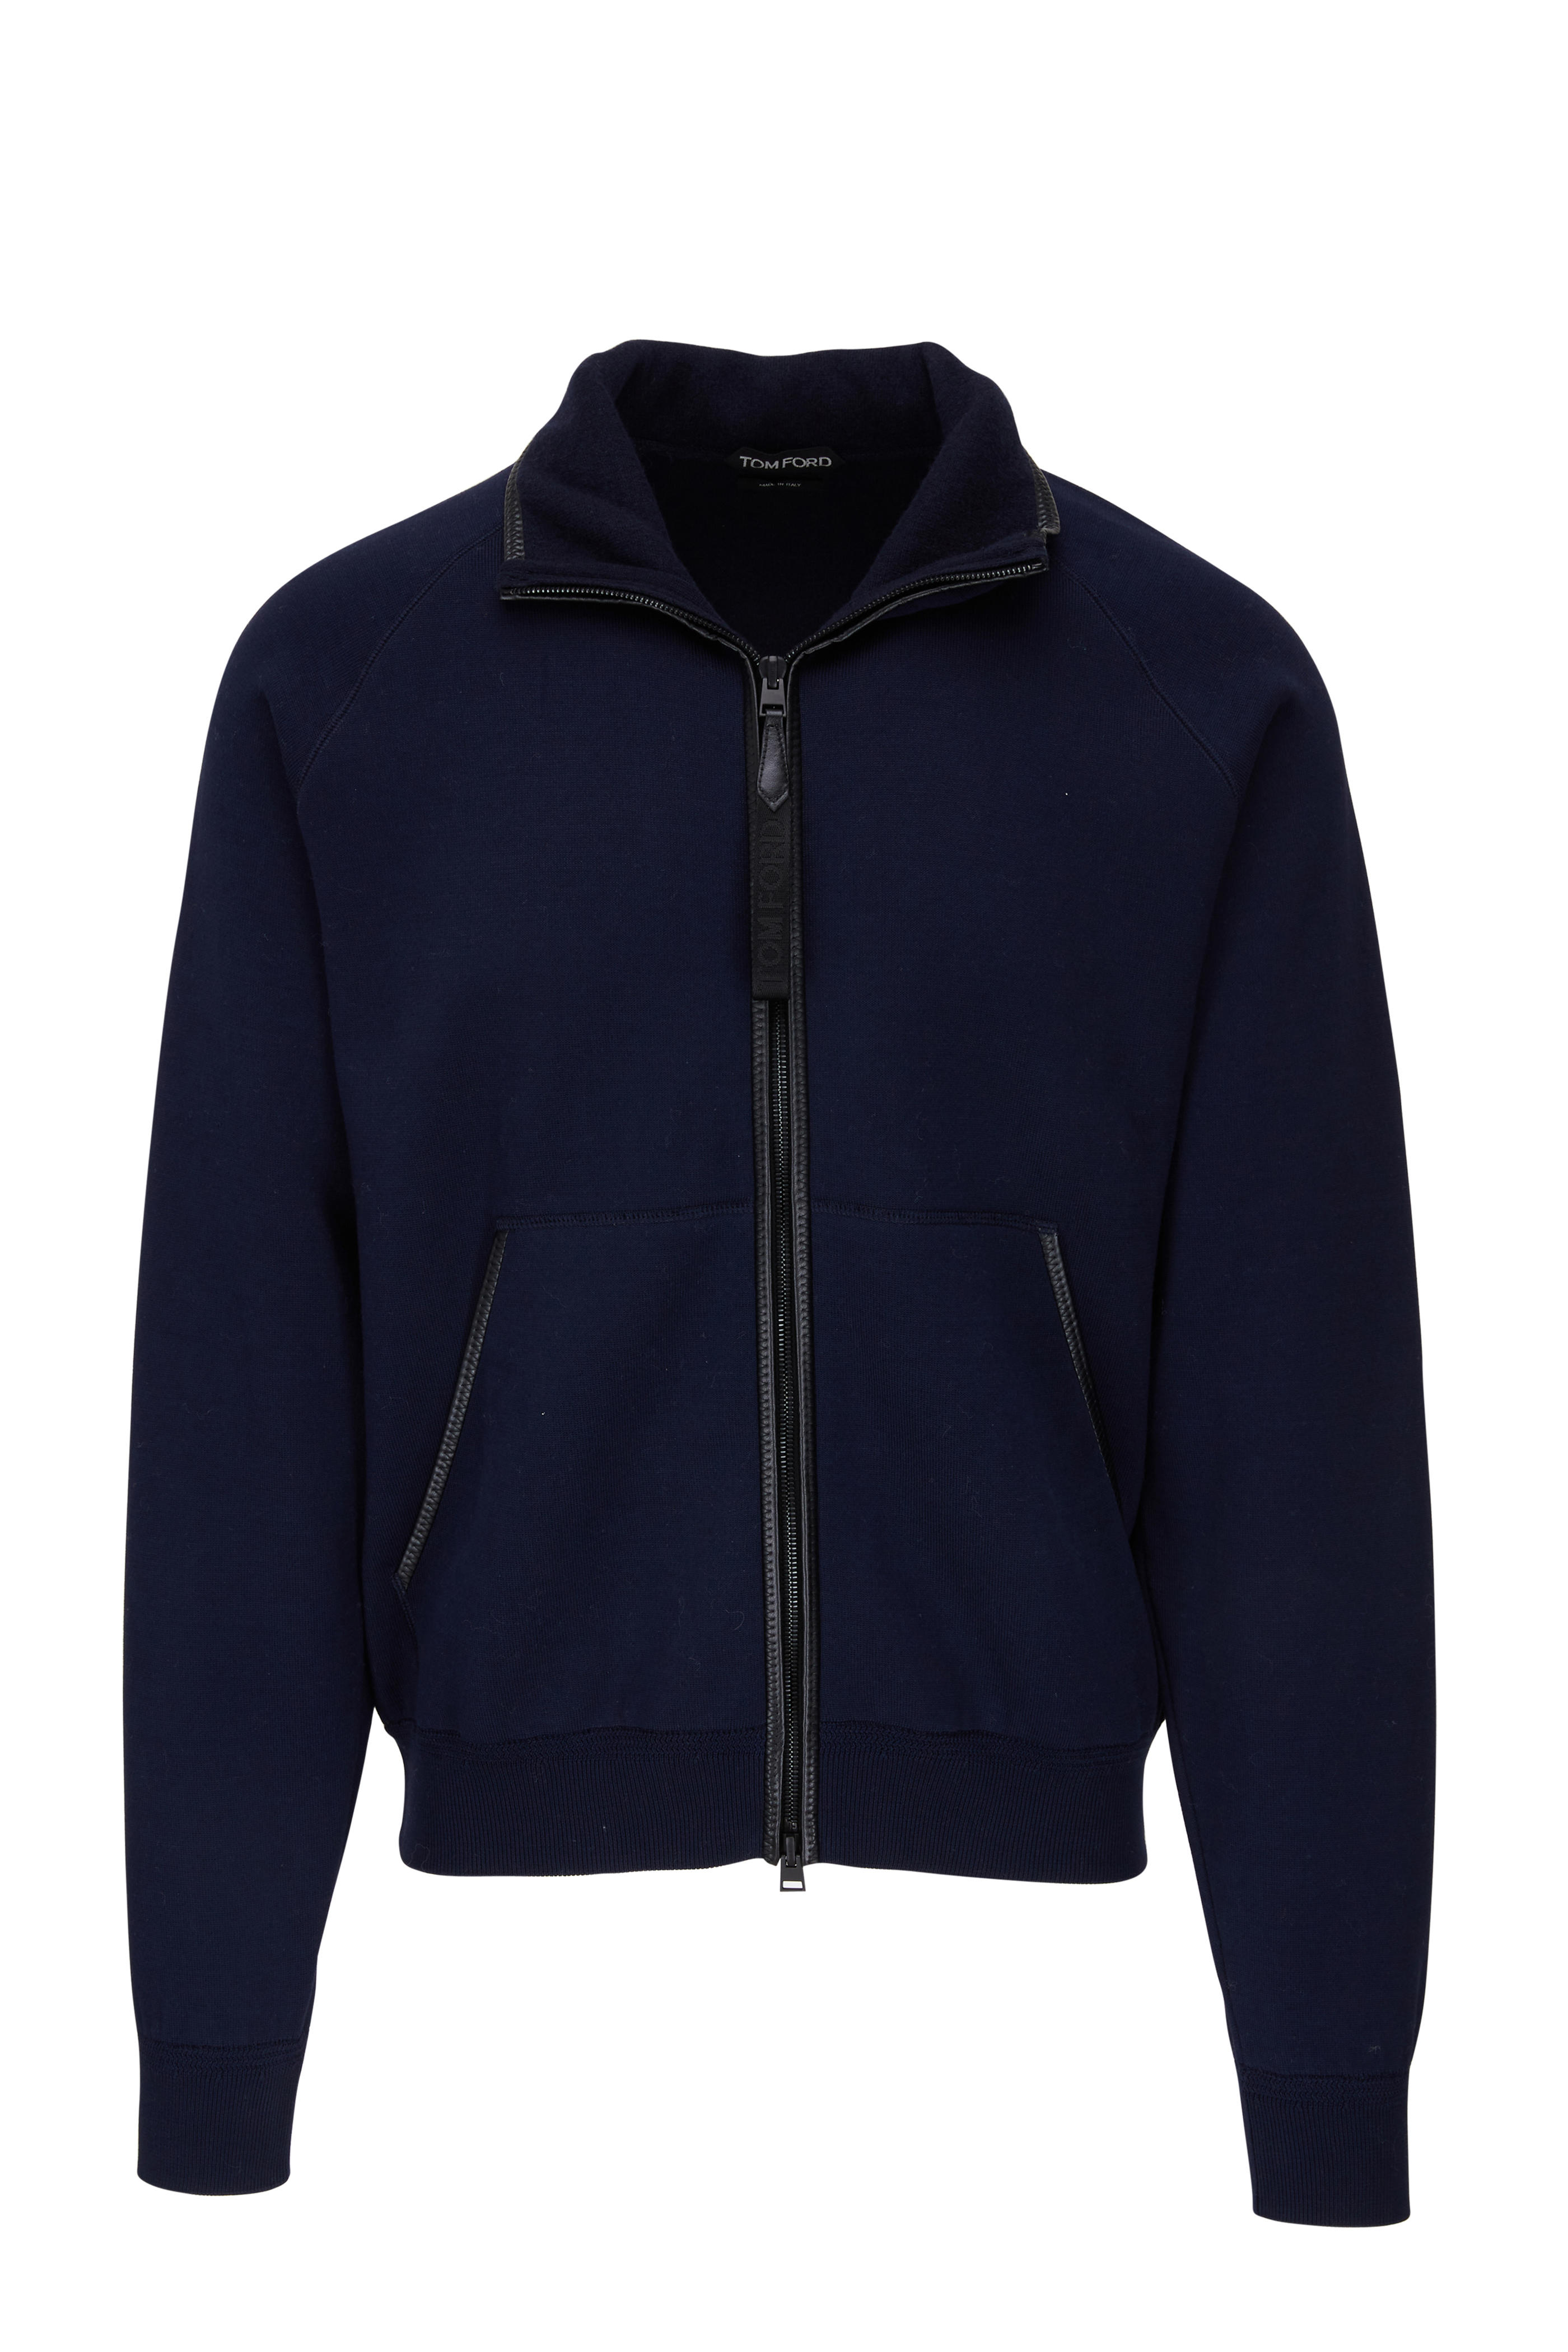 Tom Ford - Navy Cotton & Cashmere Front Zip Sweatshirt